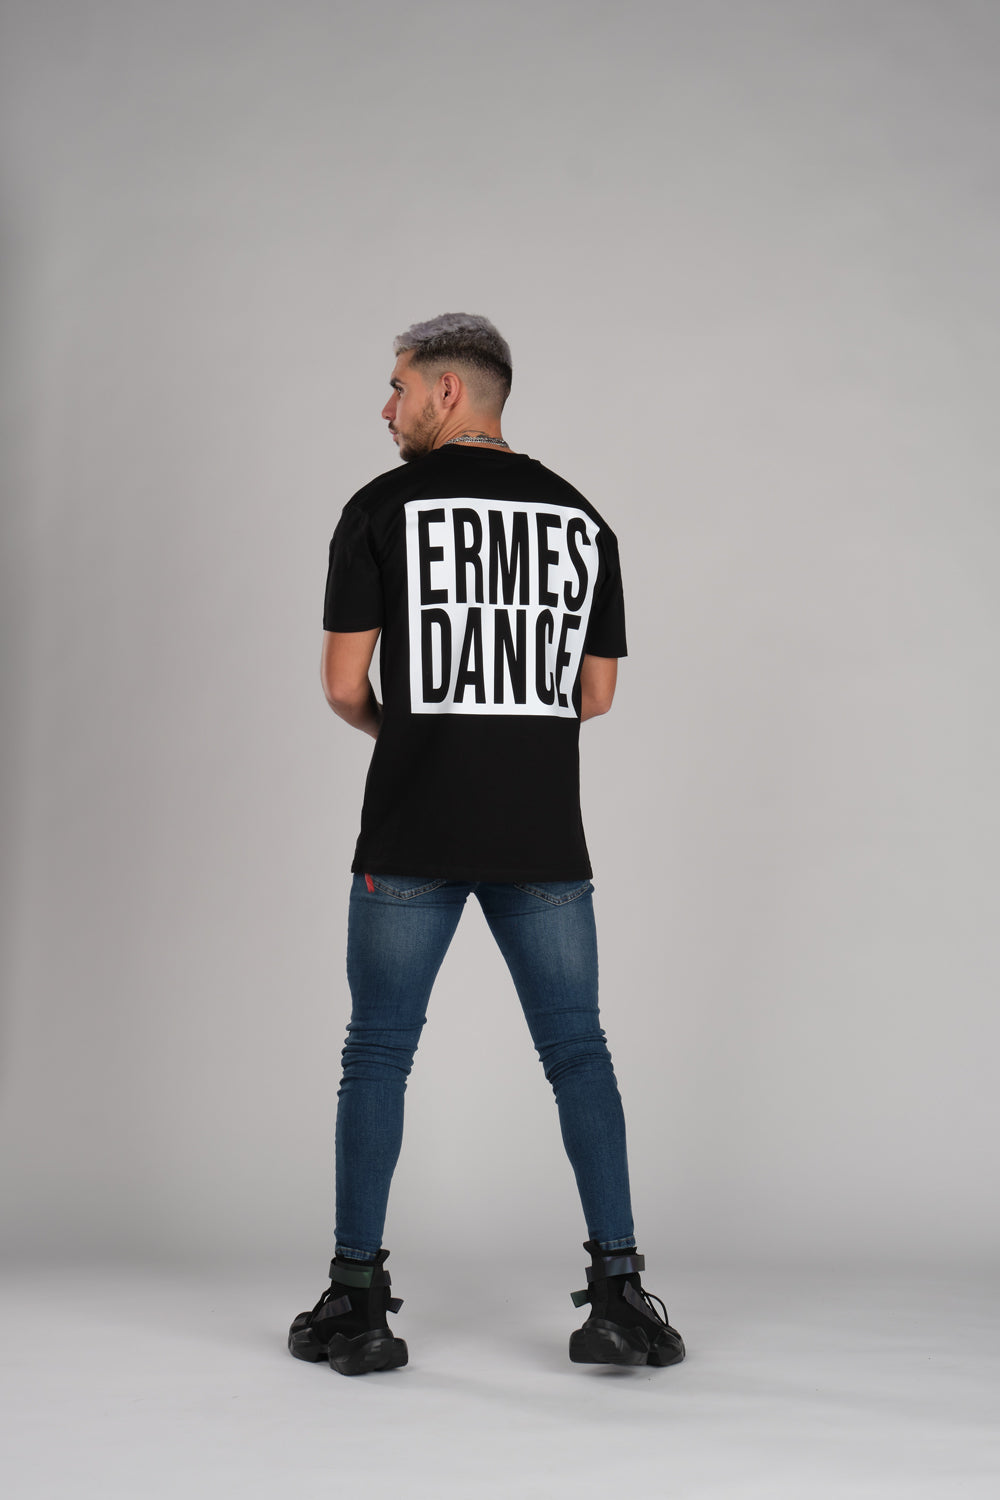 Square Ermes Dance Oversize Black T-Shirt